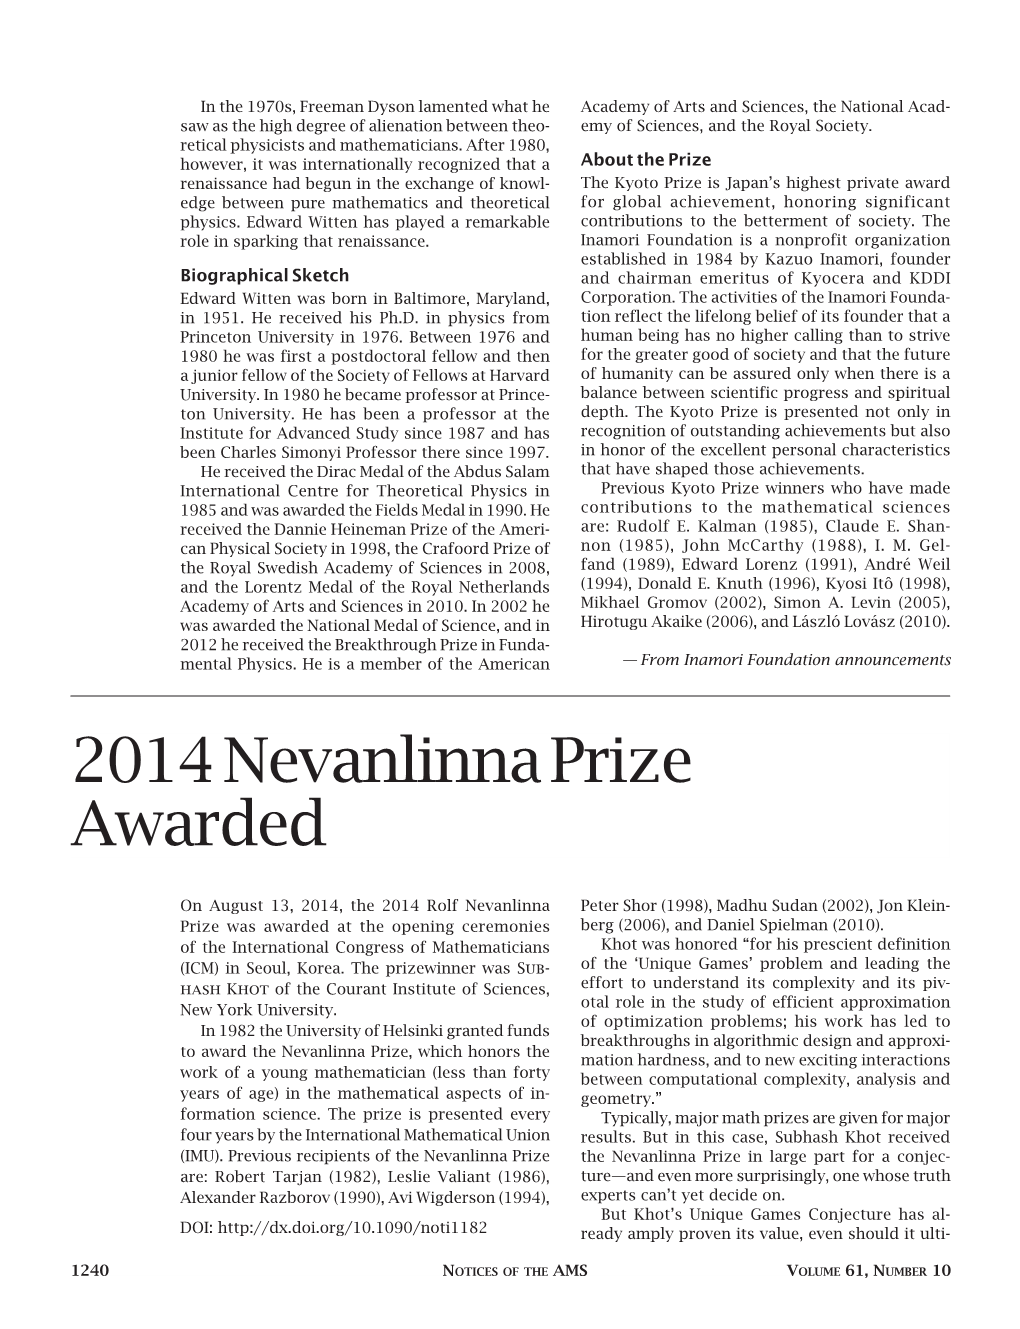 2014 Nevanlinna Prize Awarded